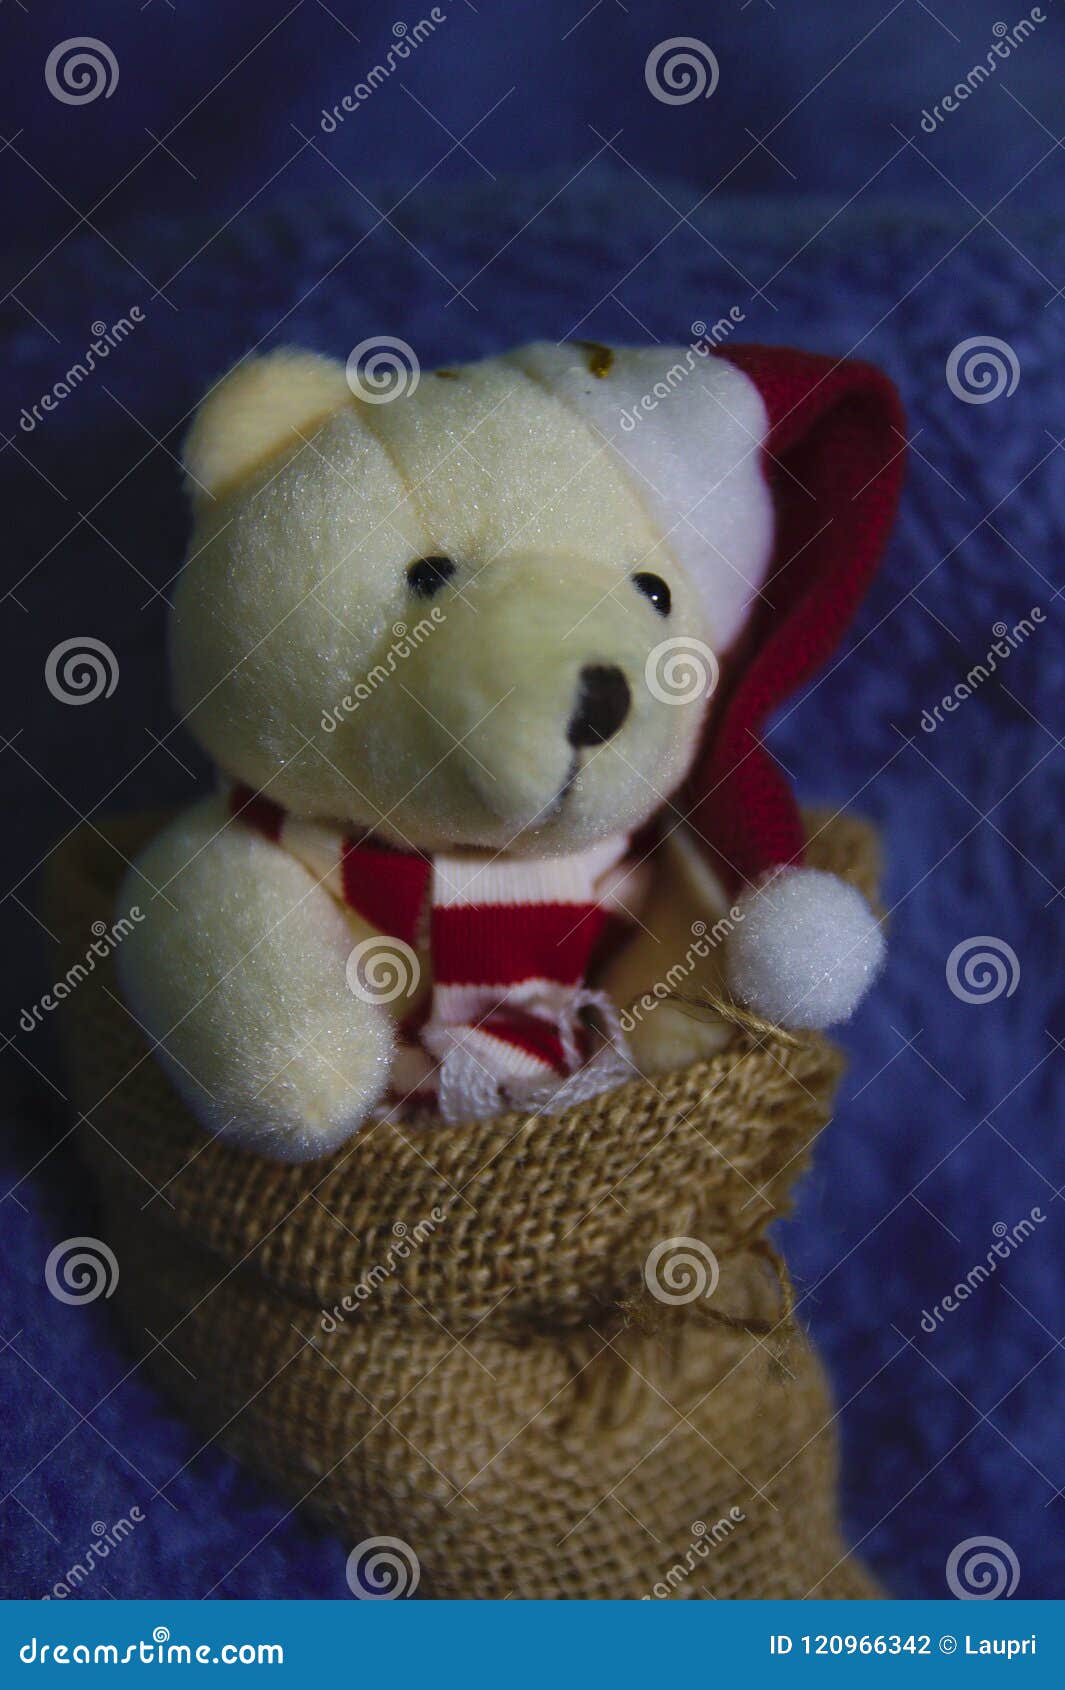 teddy bear in christmas with a yute sack